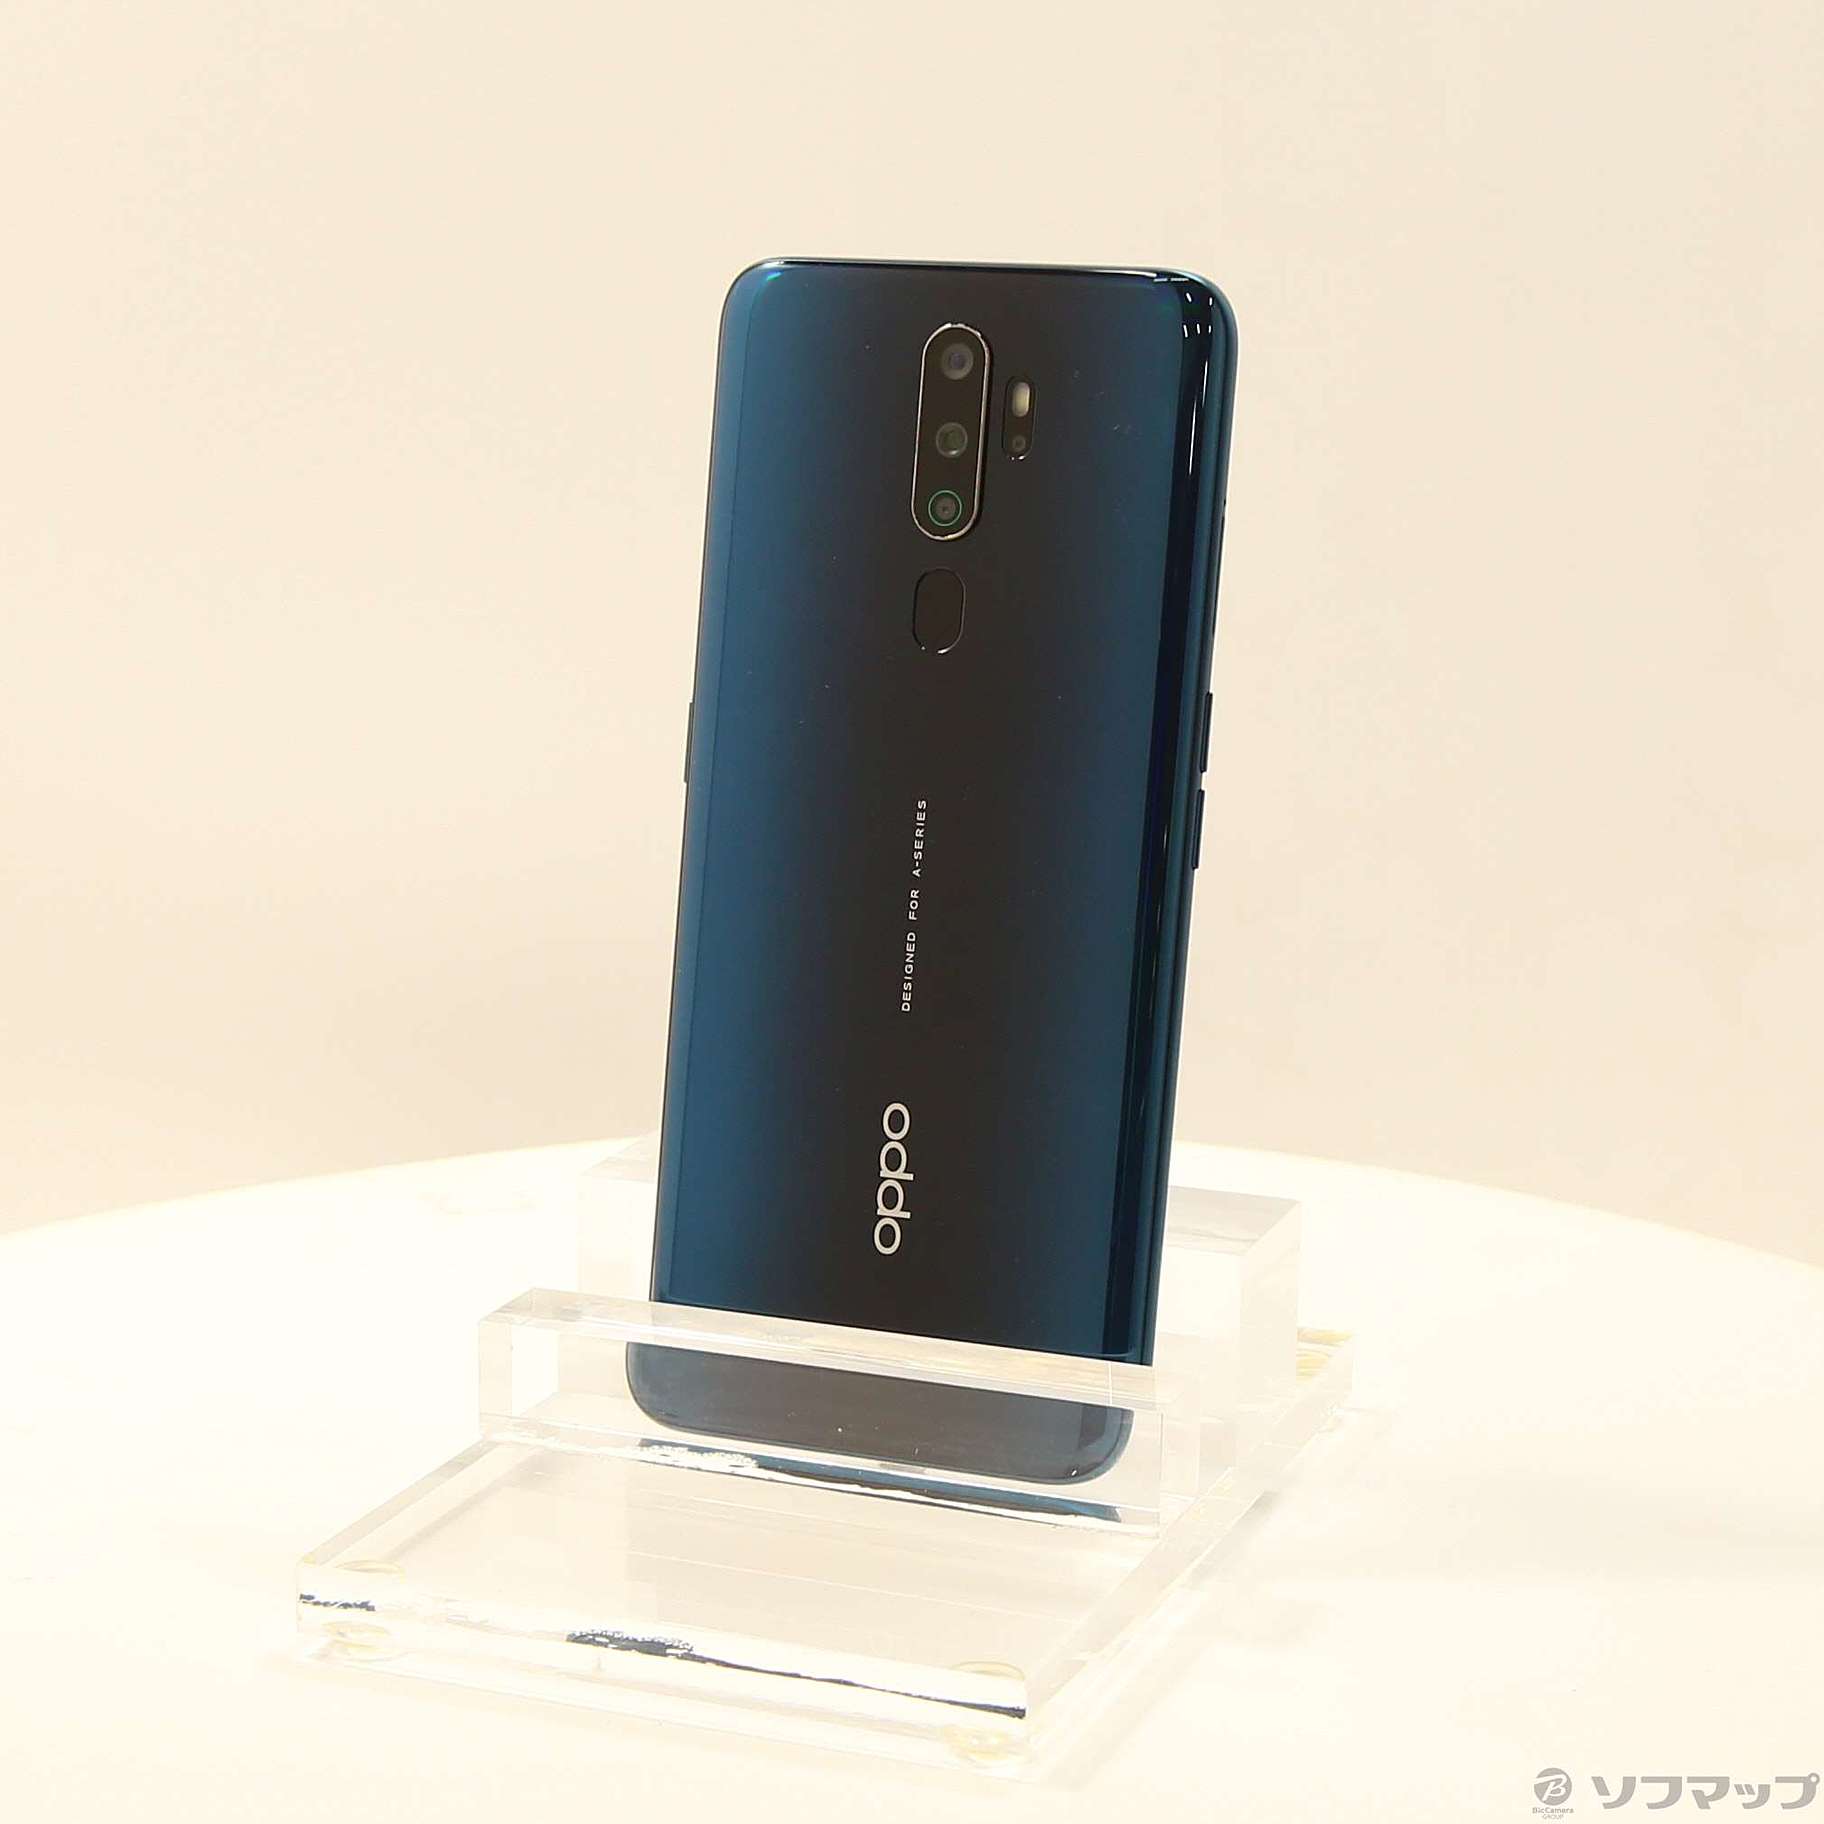 OPPO A5 2020 グリーン 64 GB SIMフリー - スマートフォン本体